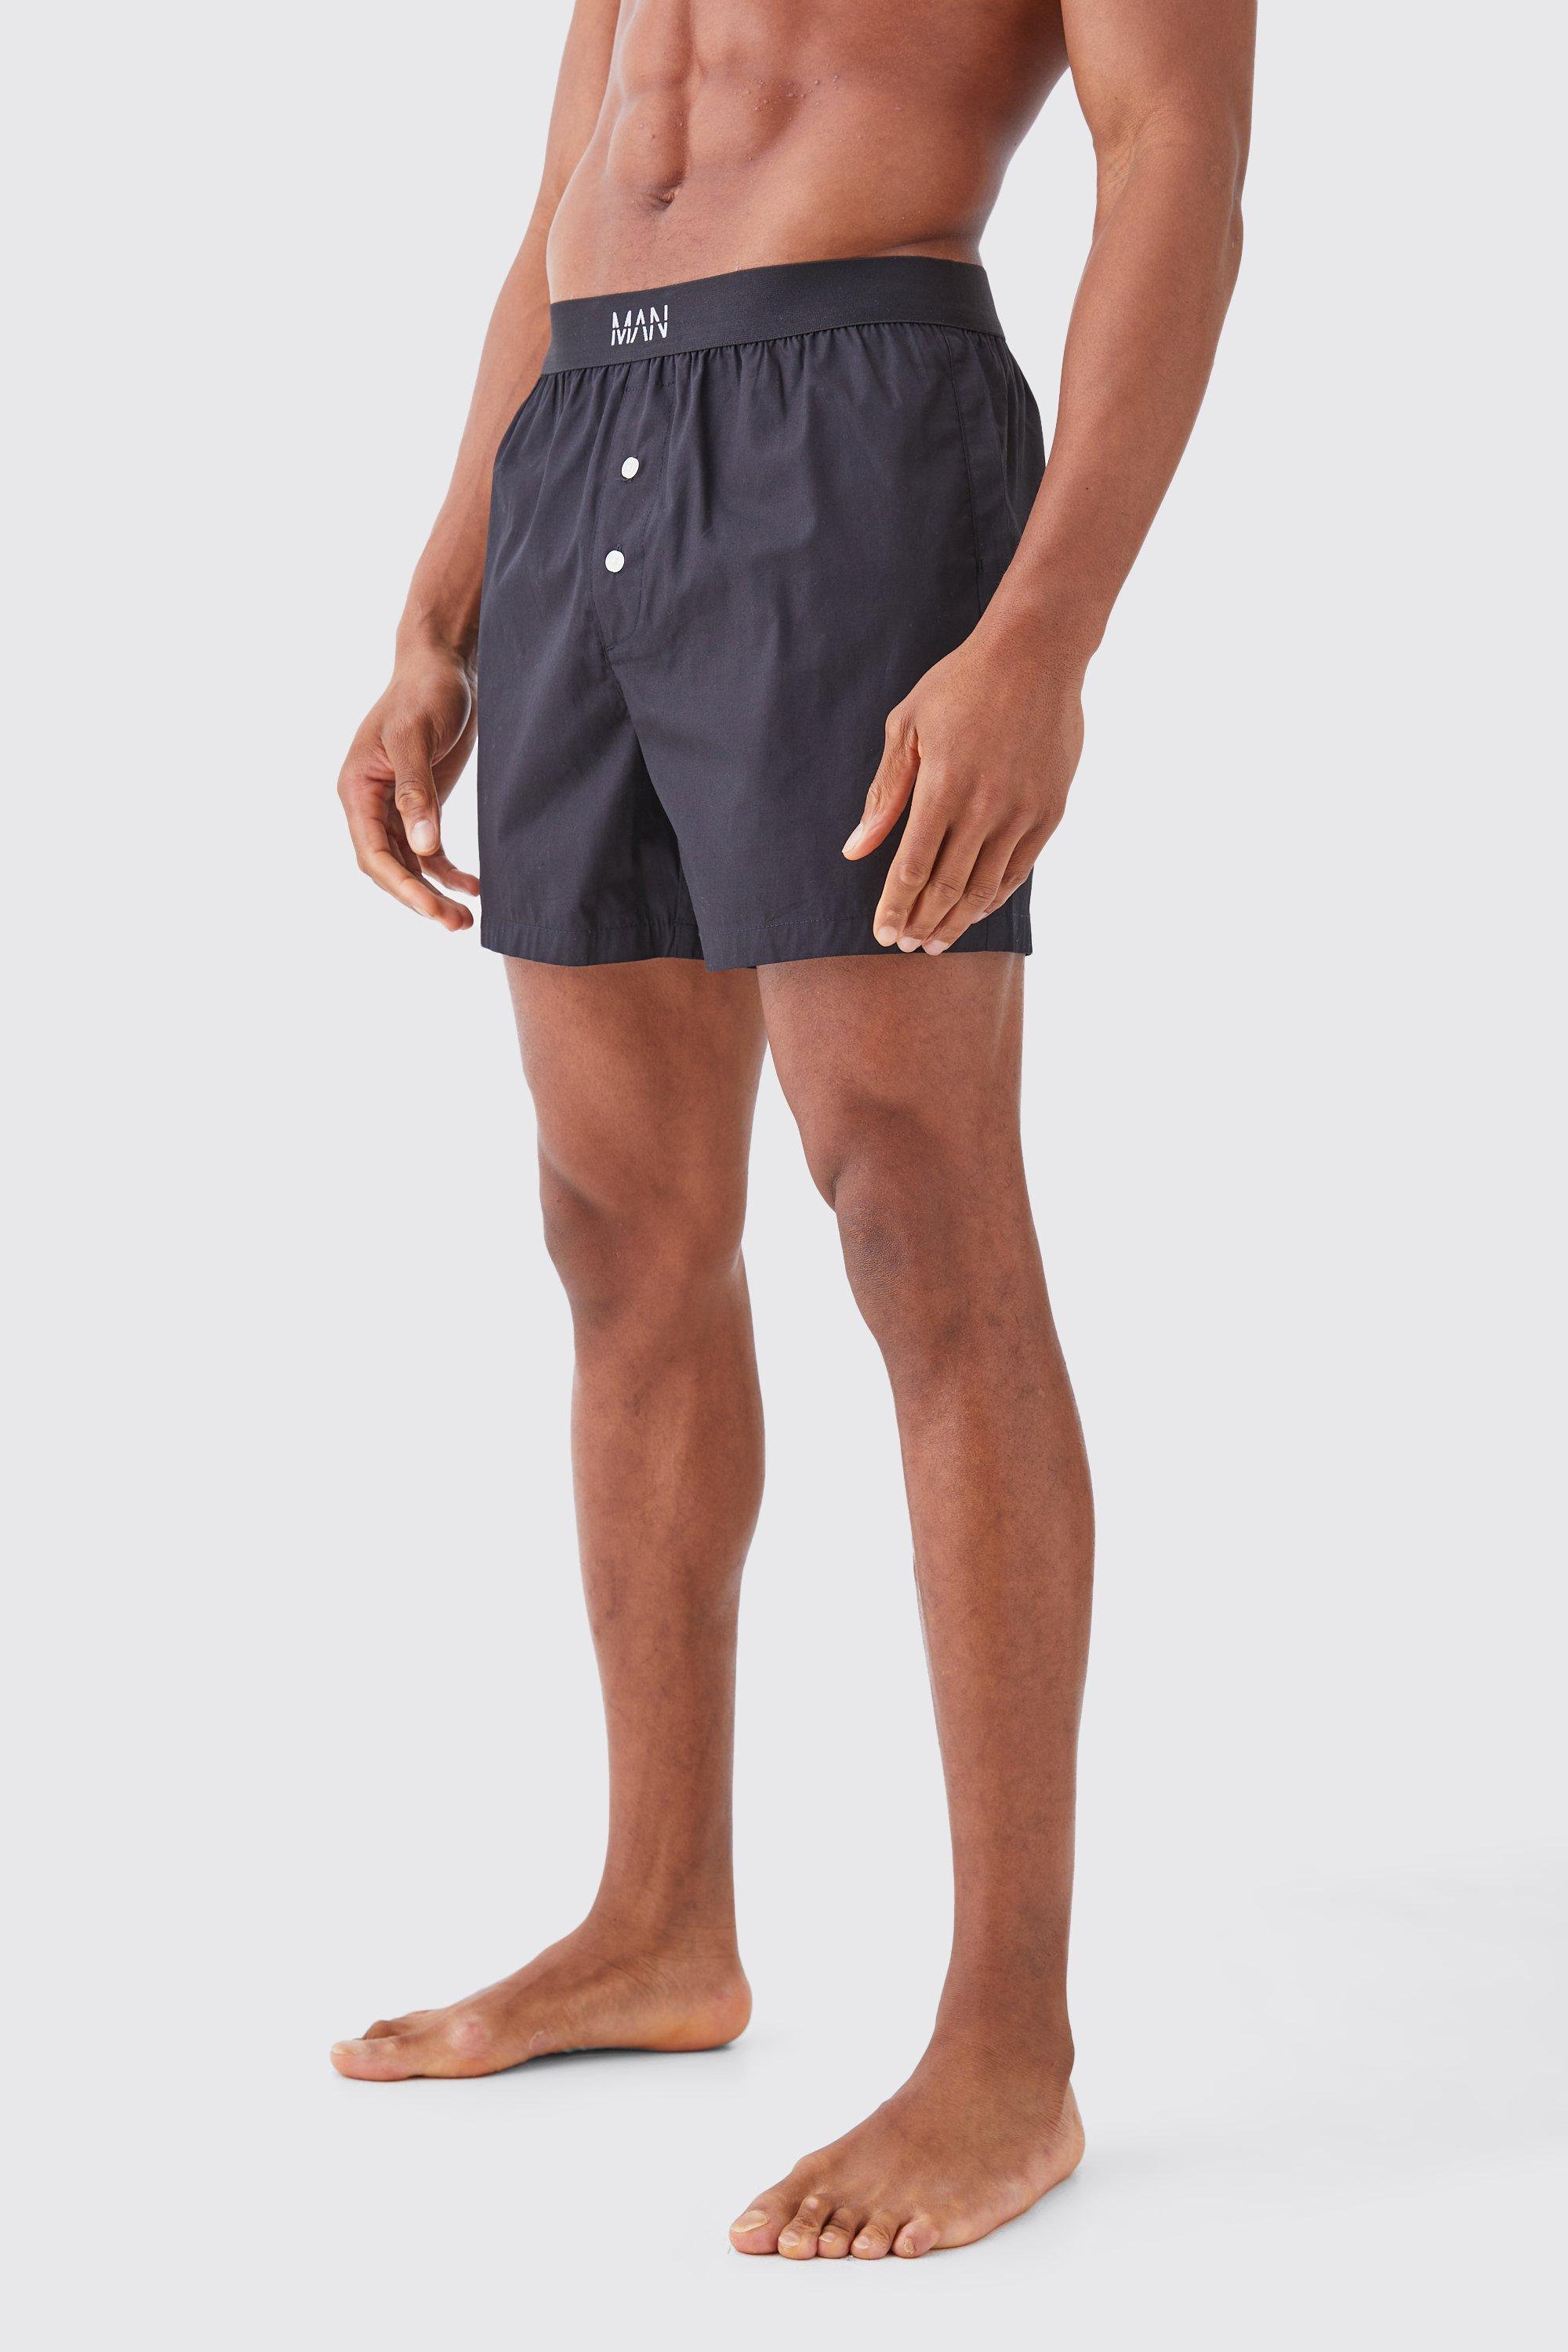 men's original man woven boxer shorts - black - s, black